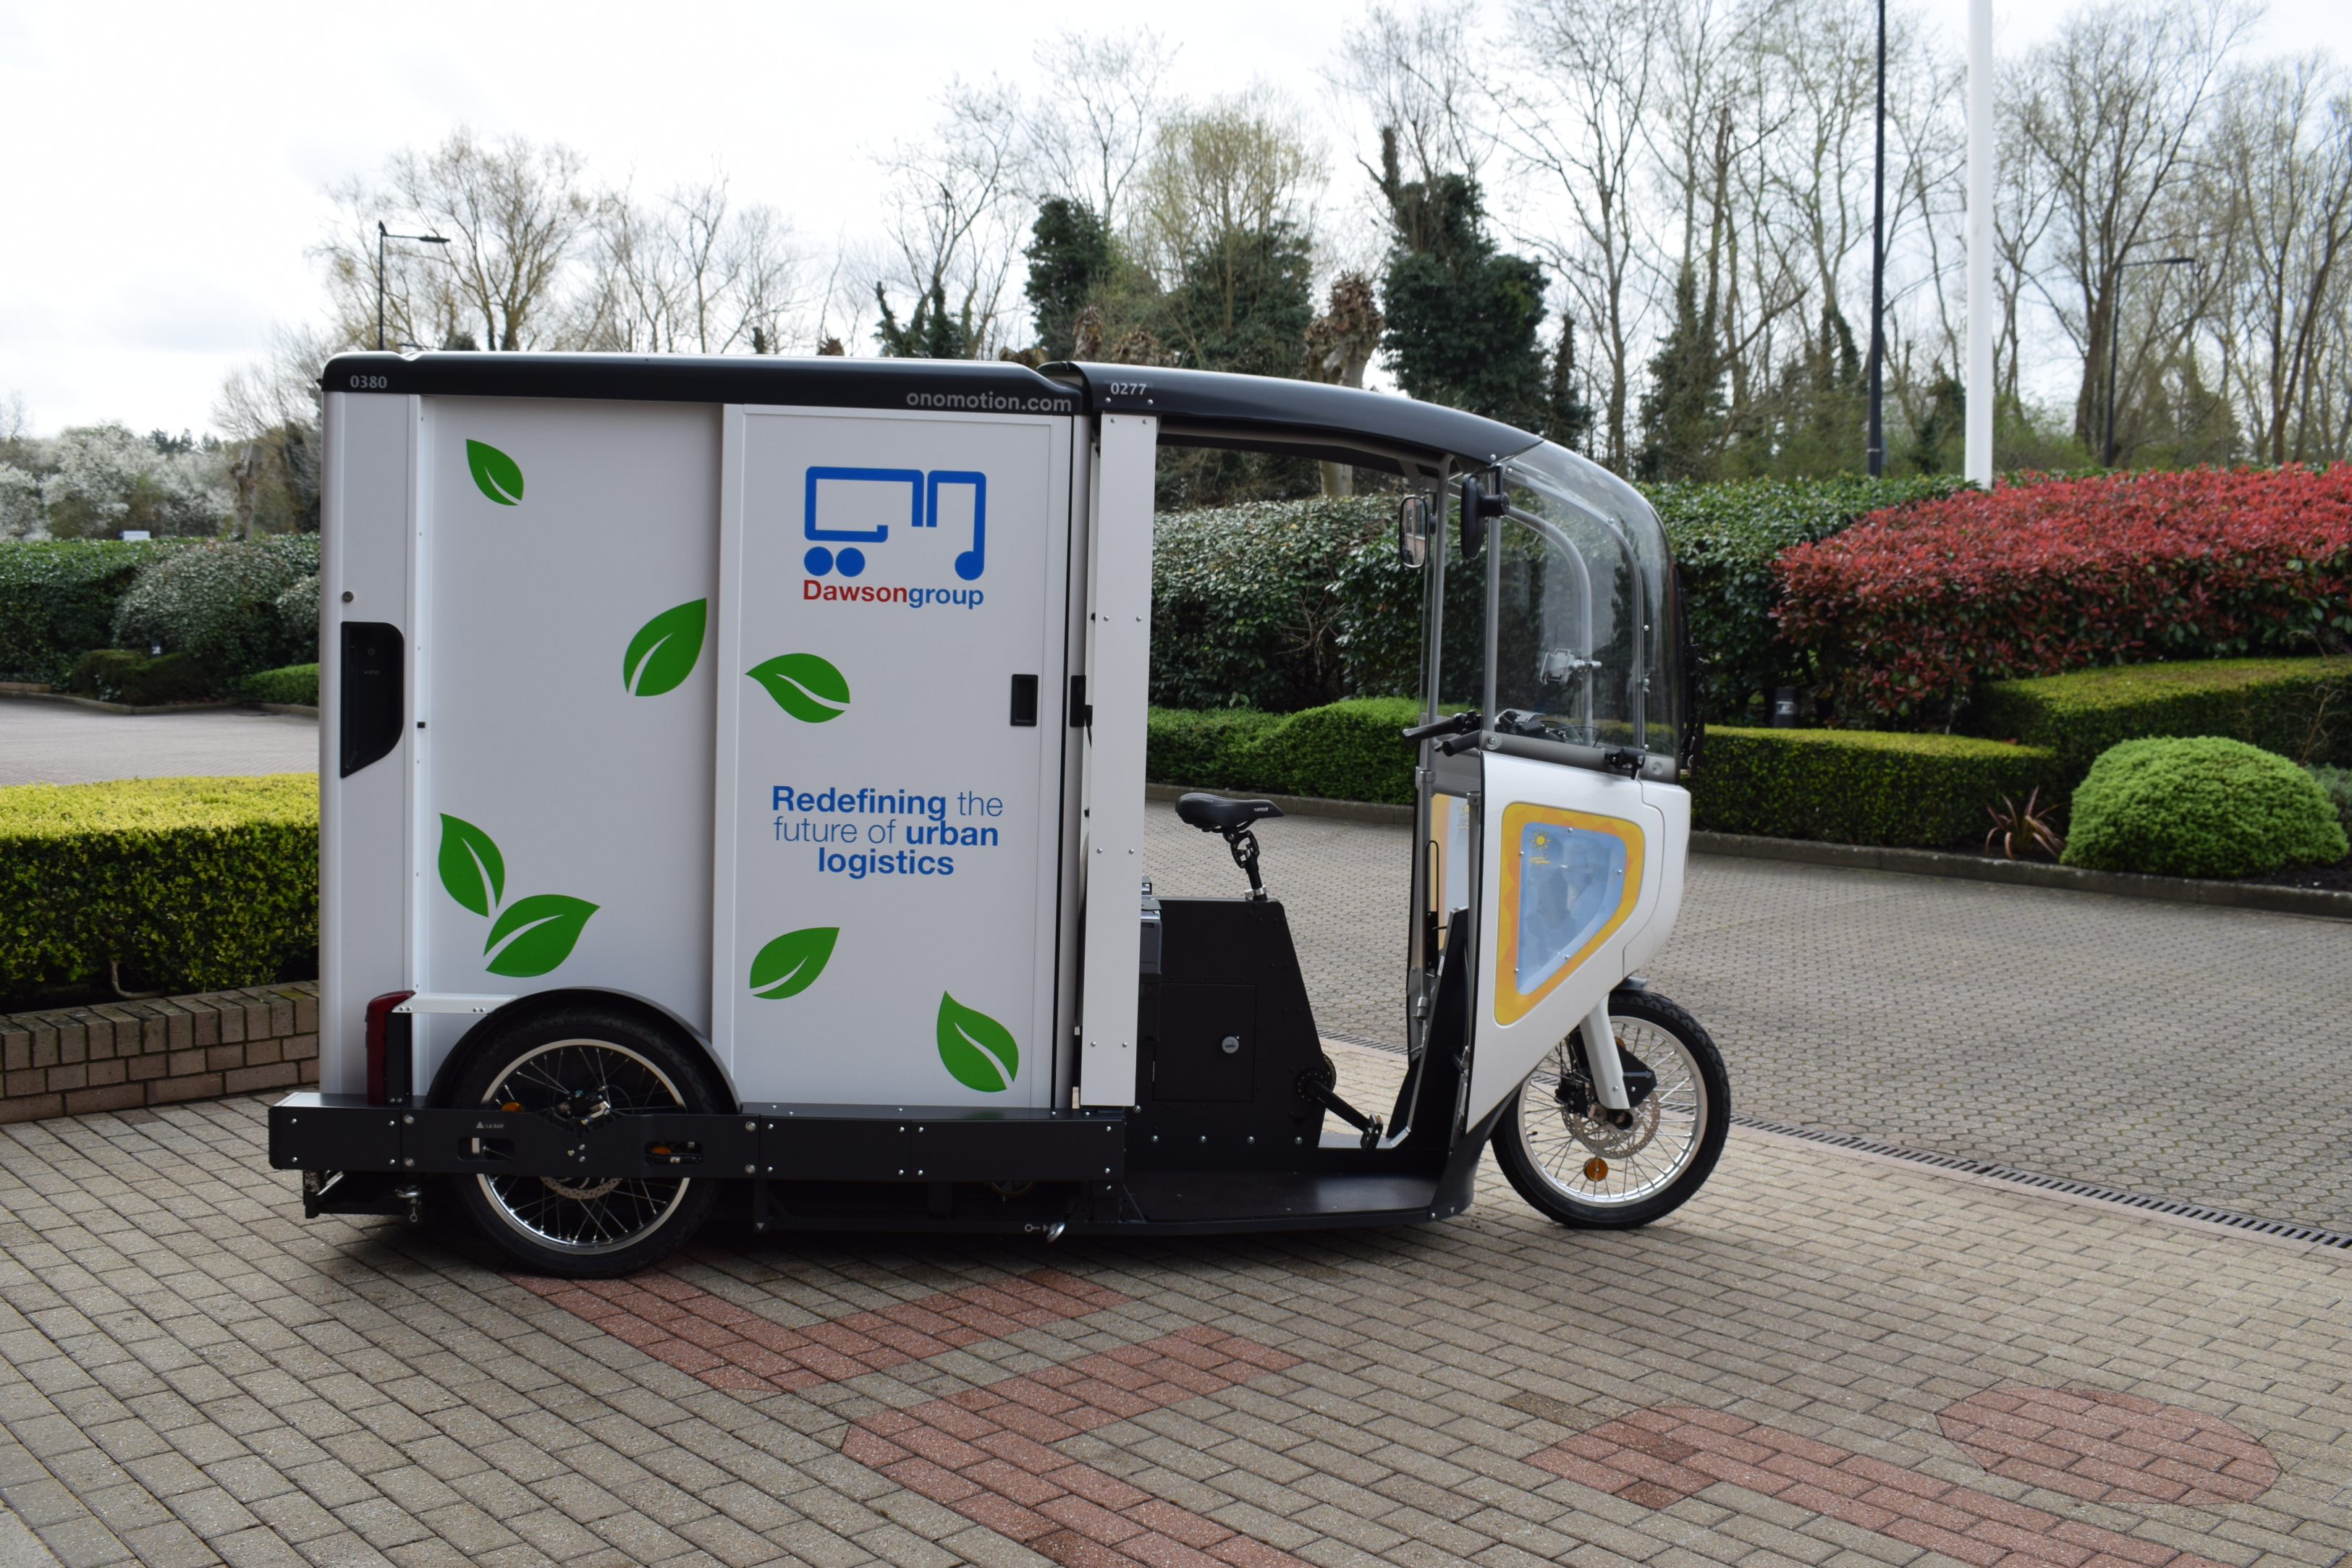 ONO e-cargo bike, refining urban logistics with Dawsongroup vans